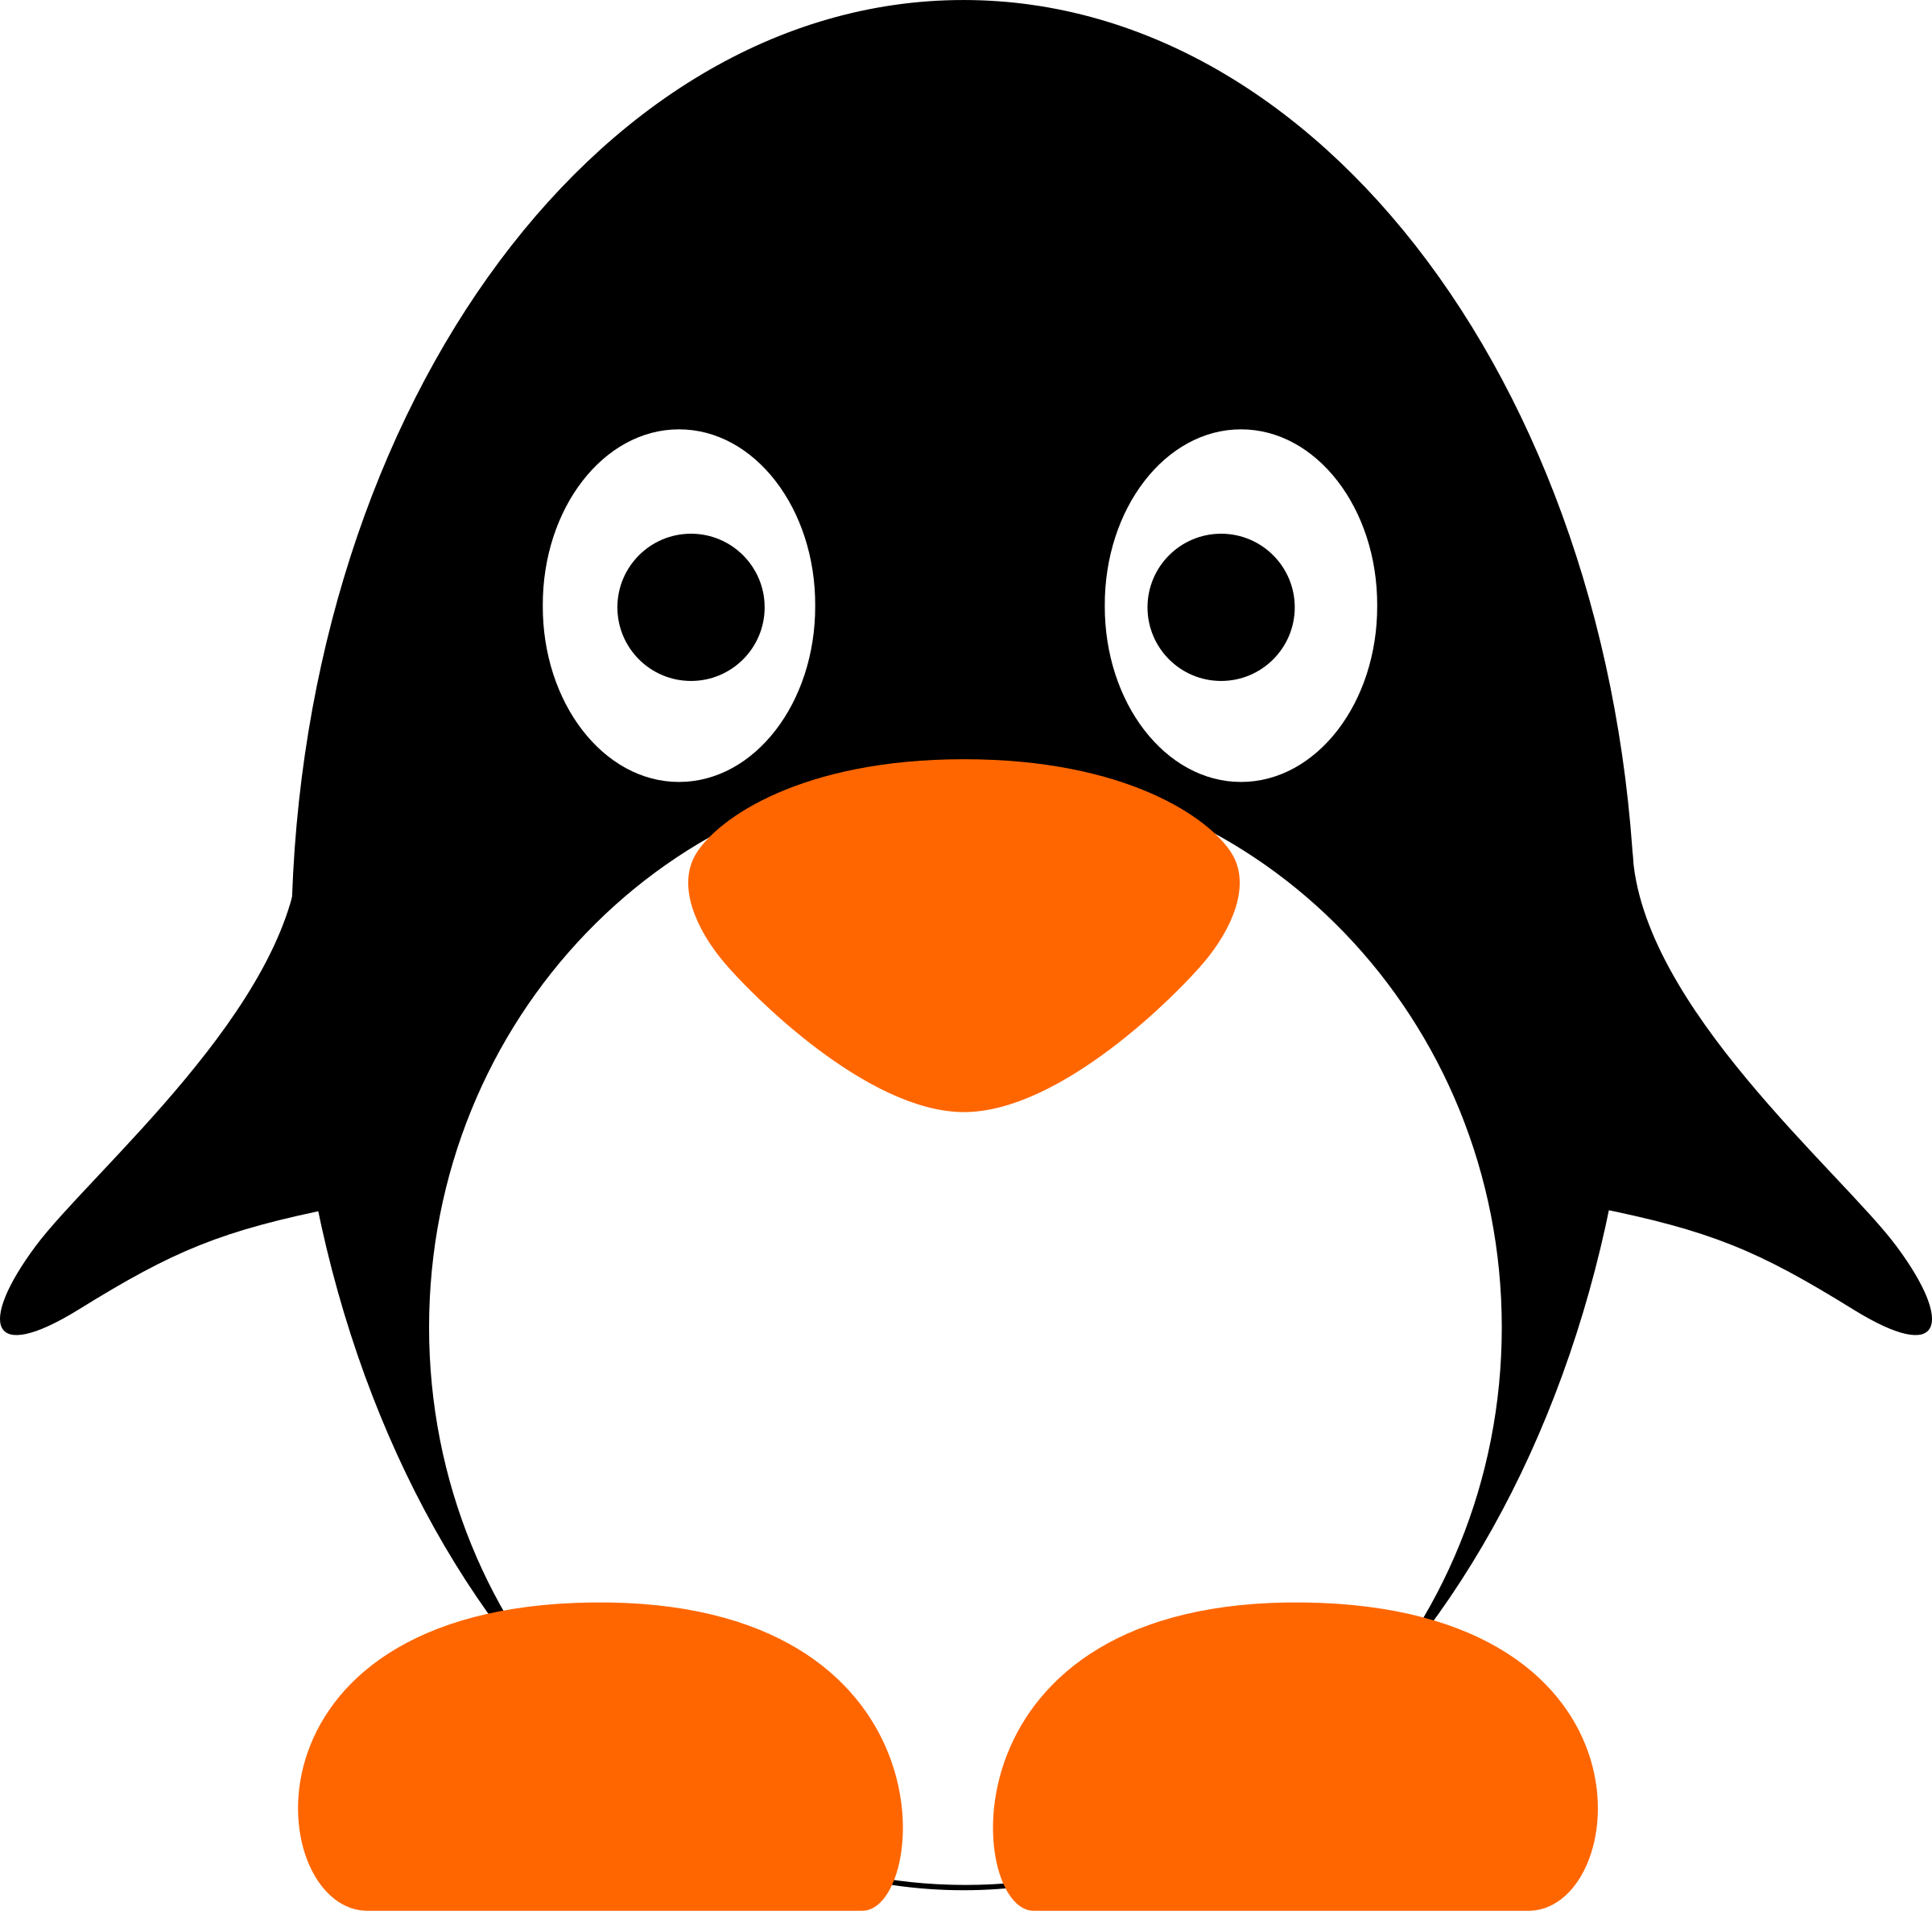 Big image png. Picture clipart penguin